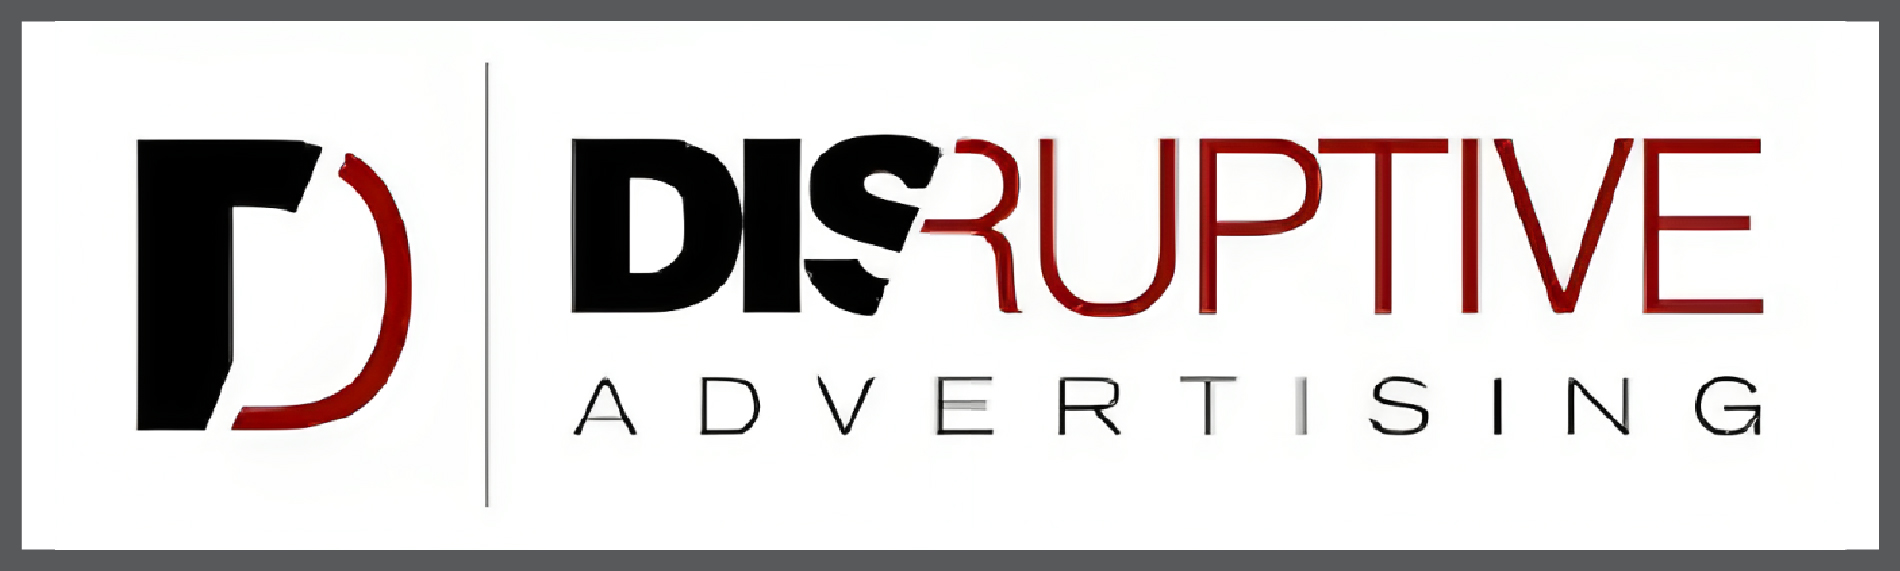 Disruptive Advertising Final-01